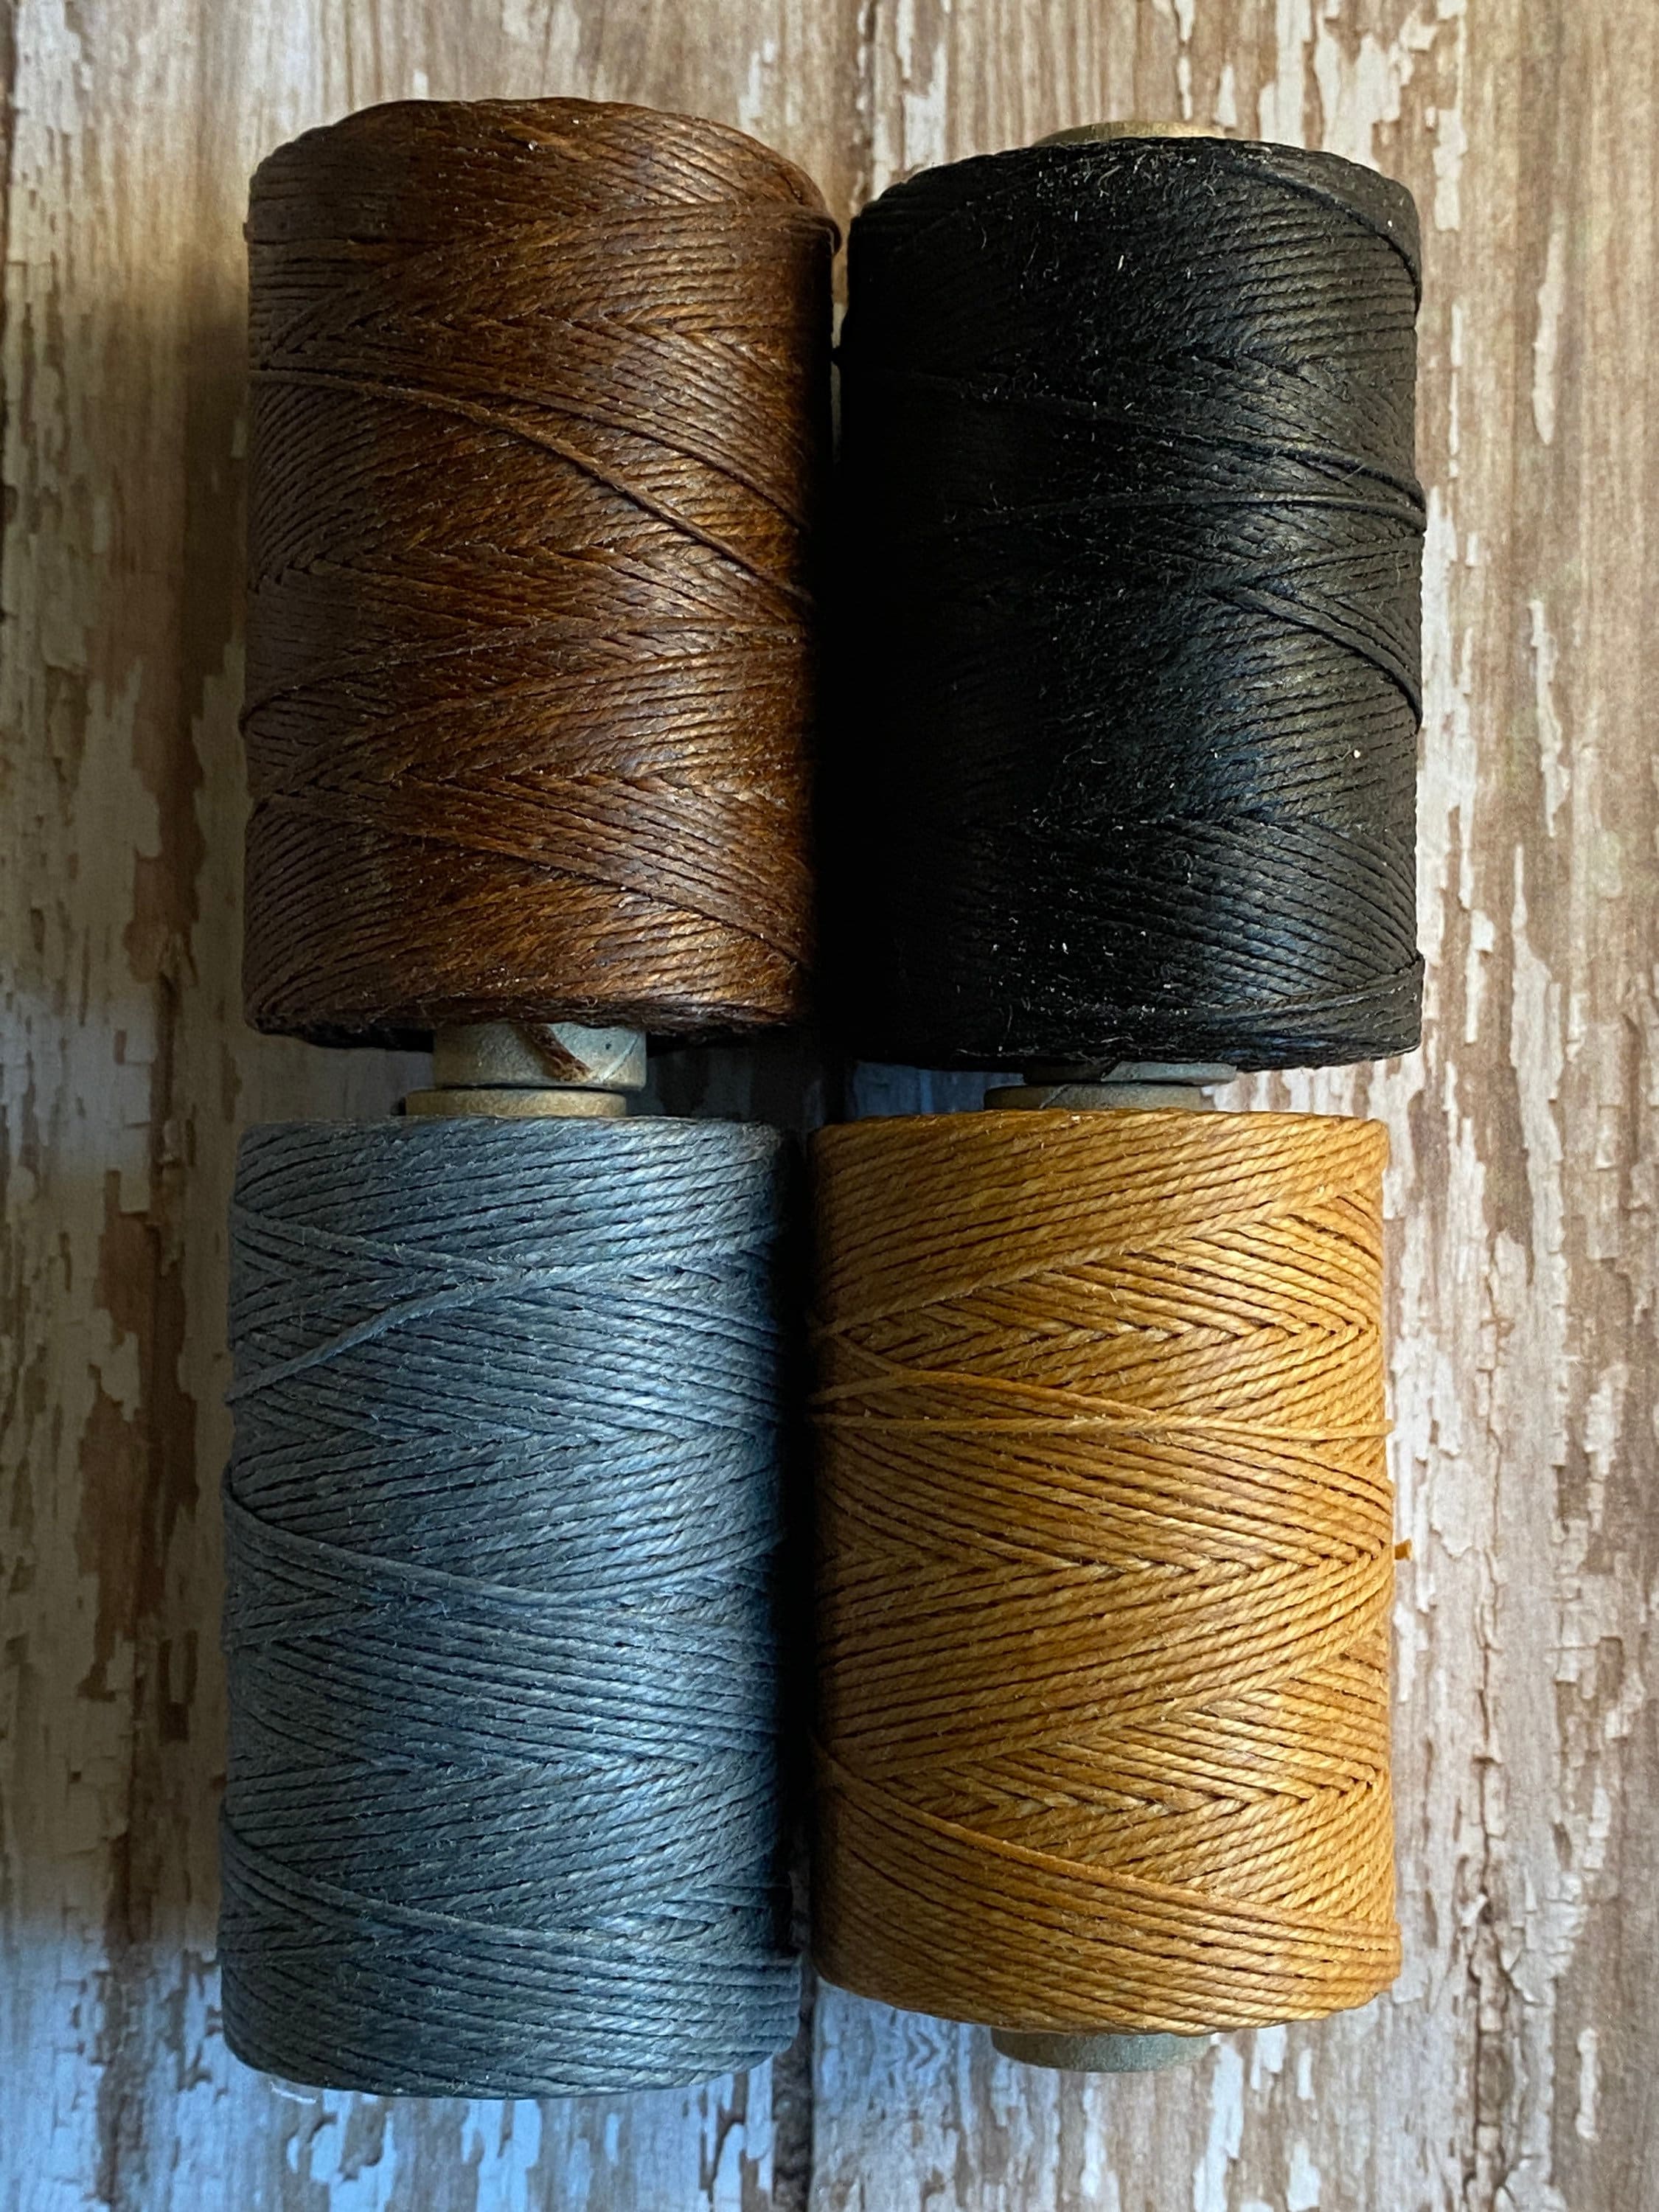 Bookbinding sewing thread- 100% Natural linen thread- Waxed- 8 options